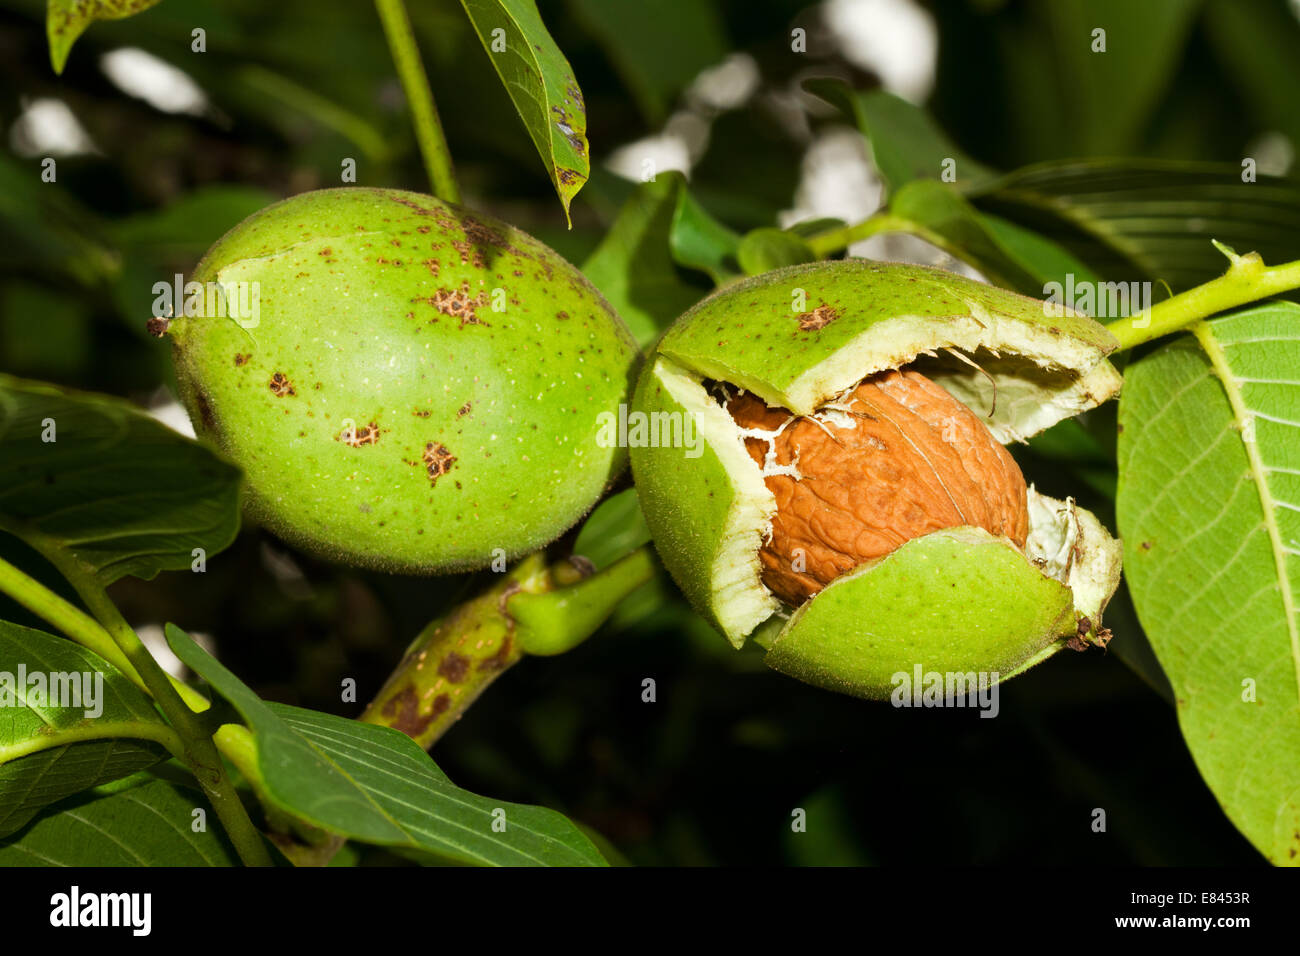 Ripe nuts of a Walnut tree Stock Photo